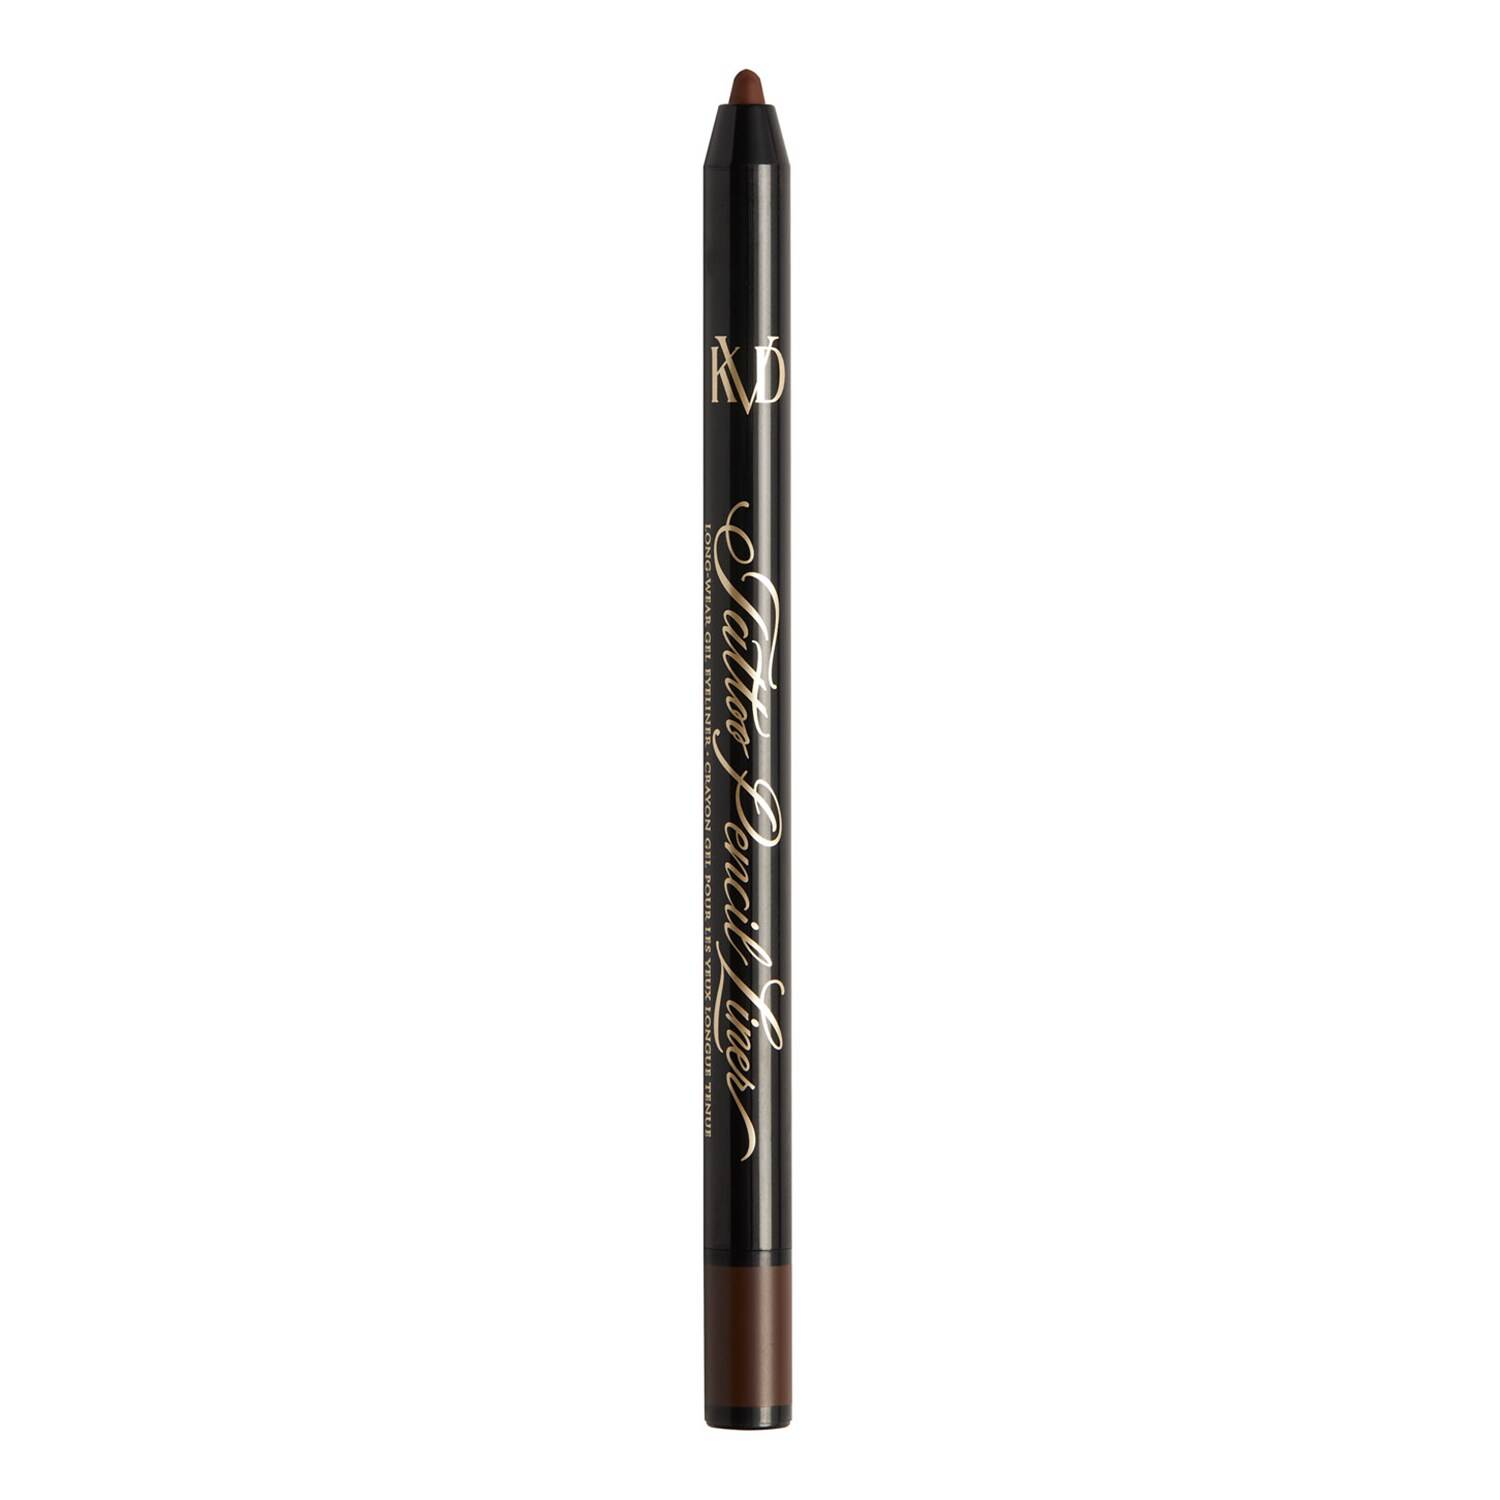 Kvd Beauty Tattoo Pencil Liner Waterproof Long-Wear Gel Eyeliner 0.5G Axinite Brown